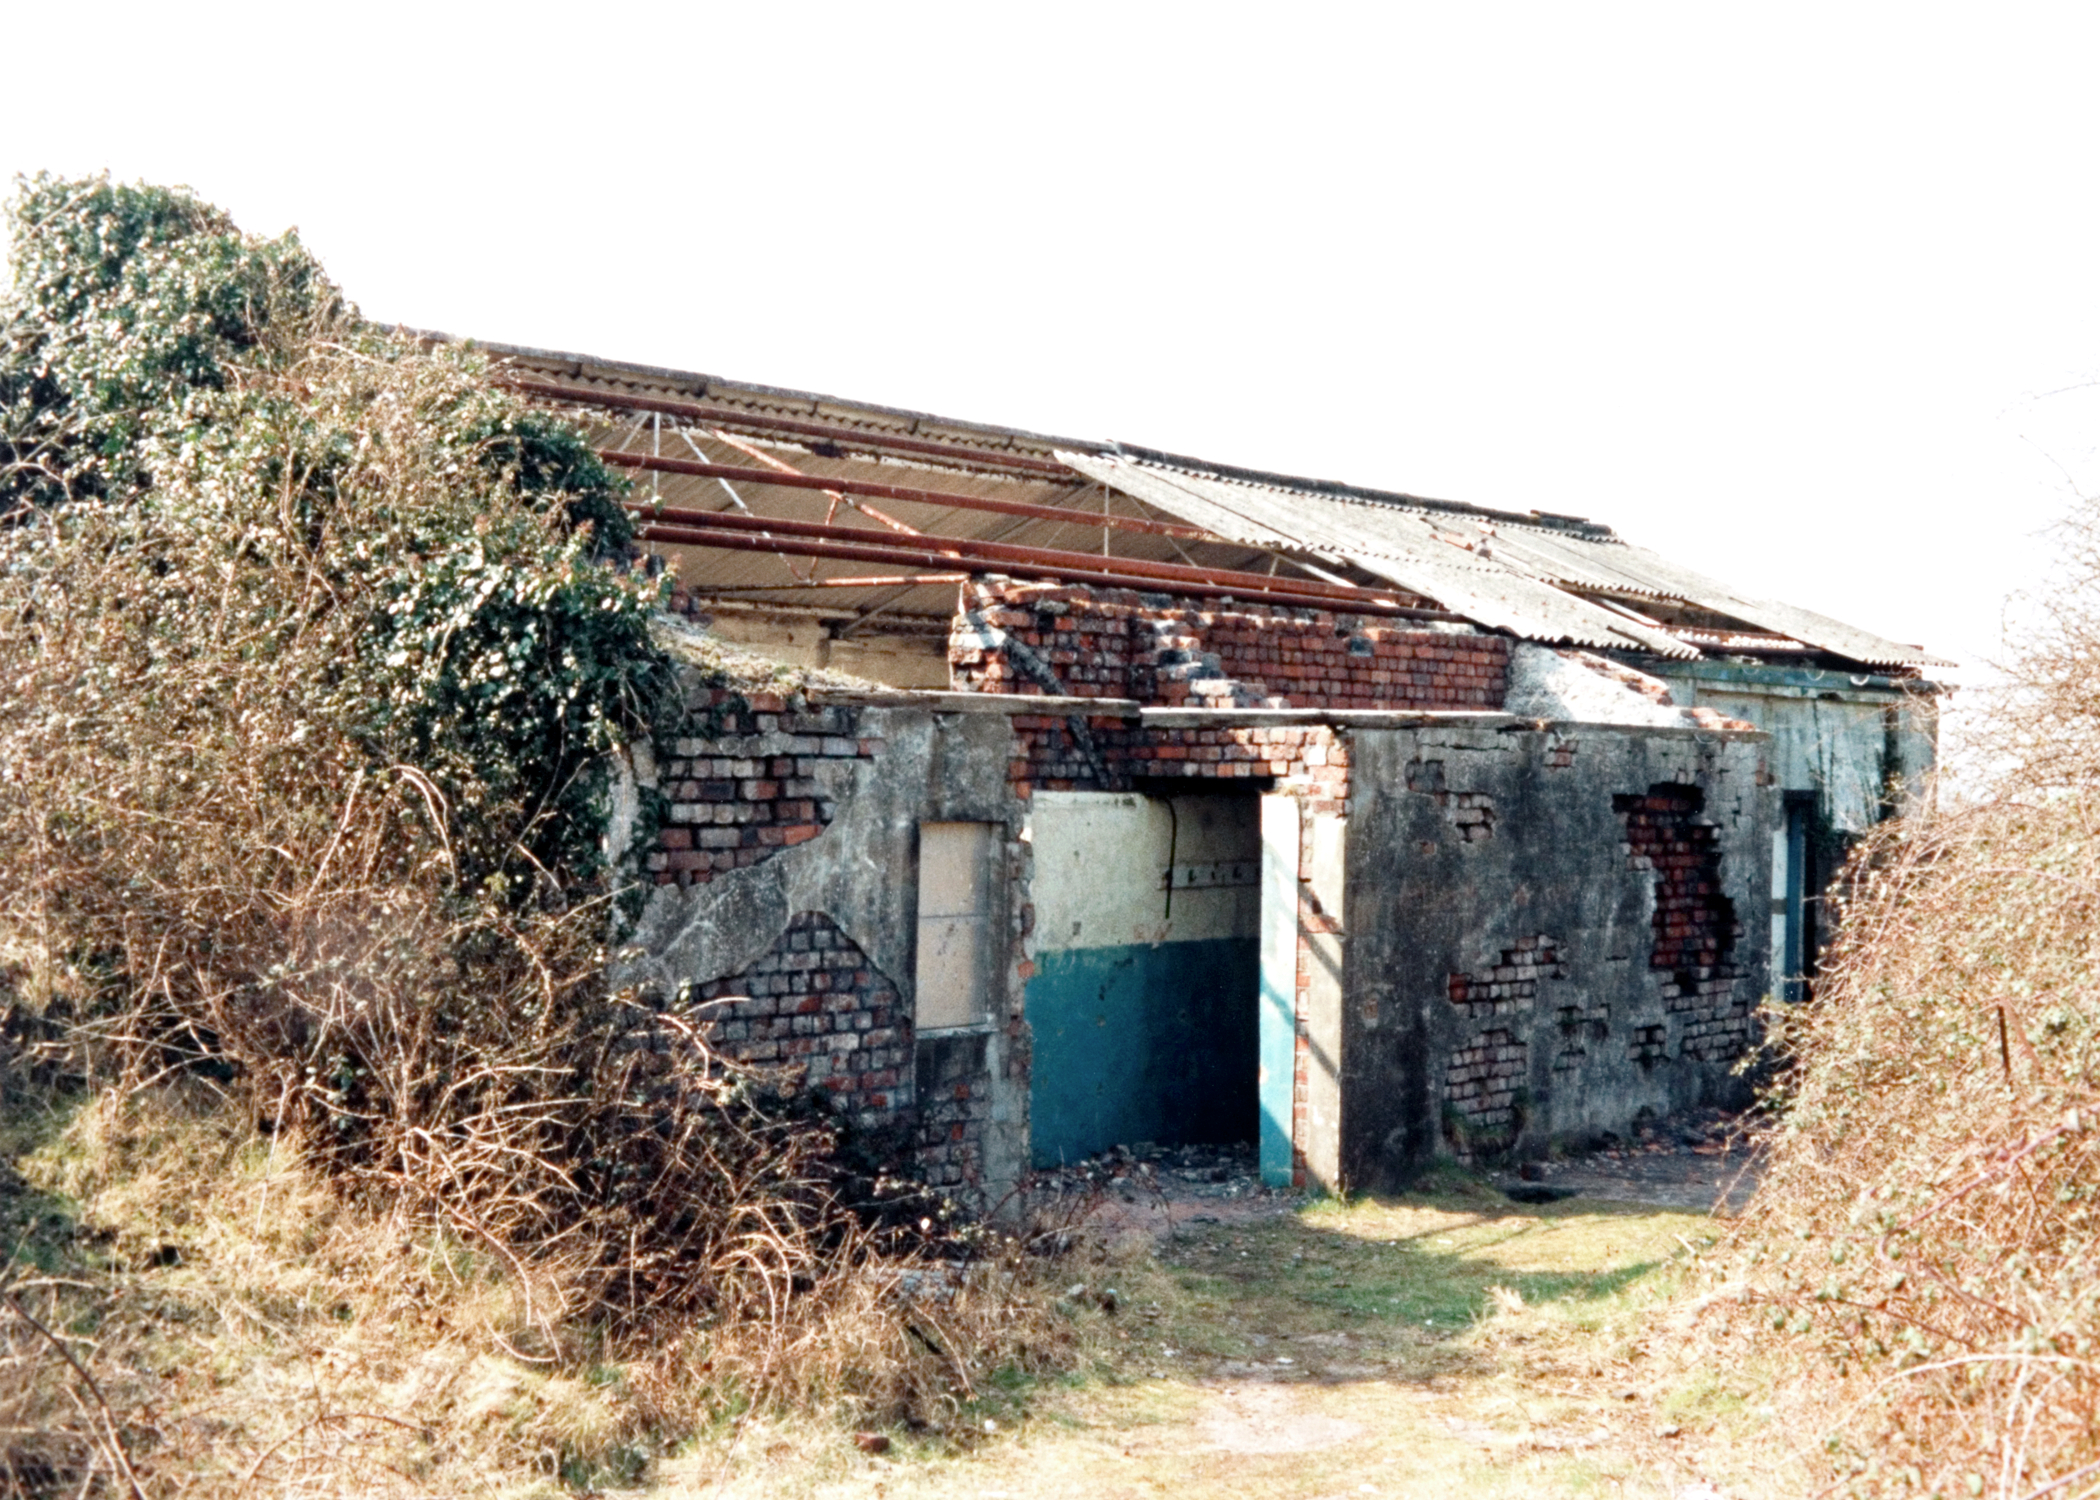 Caeduke Colliery remains, photograph